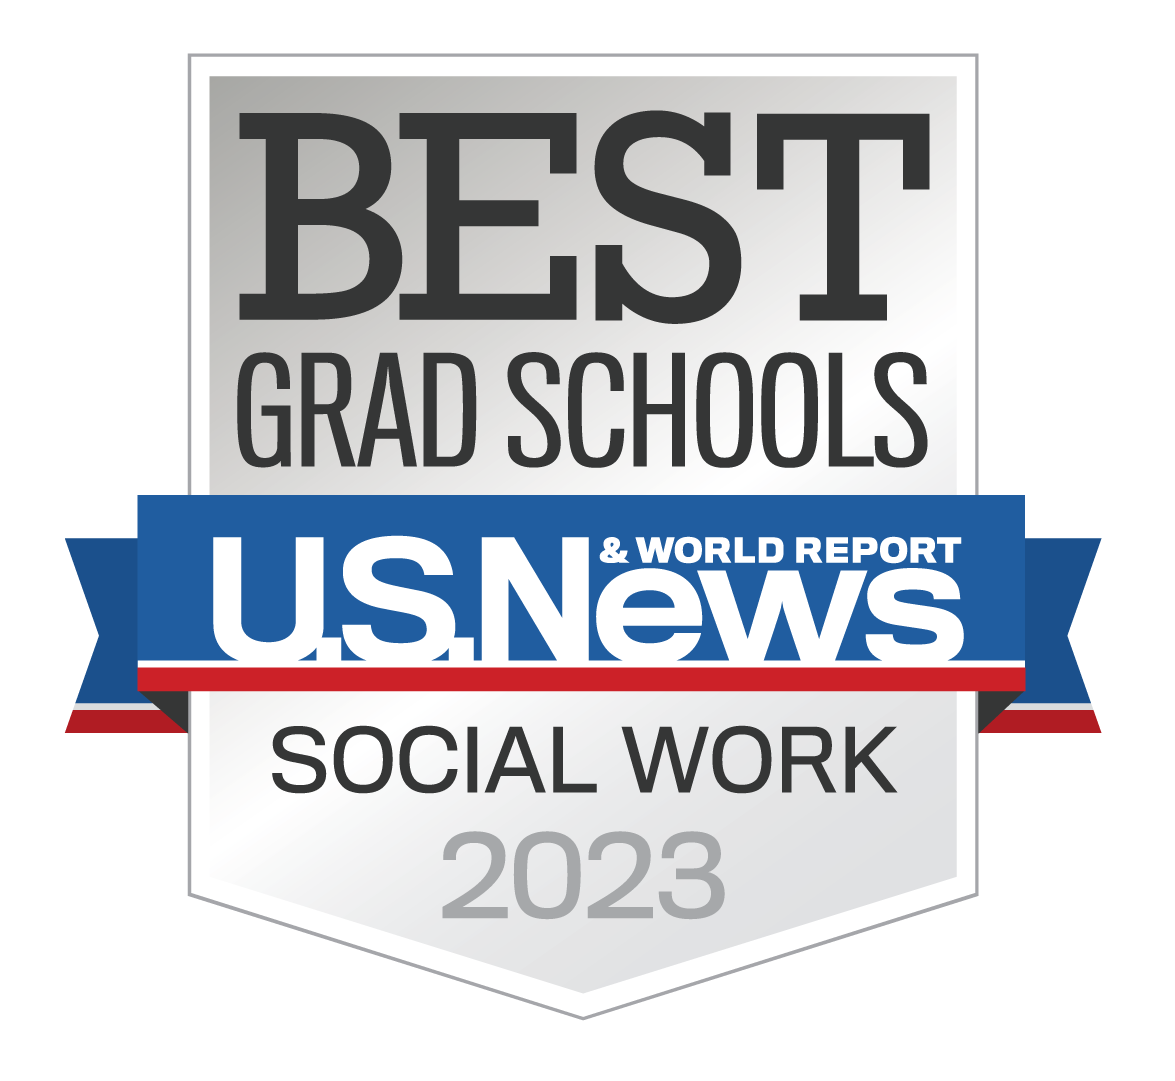 Best Grad Schools U.S.News Social Work 2023